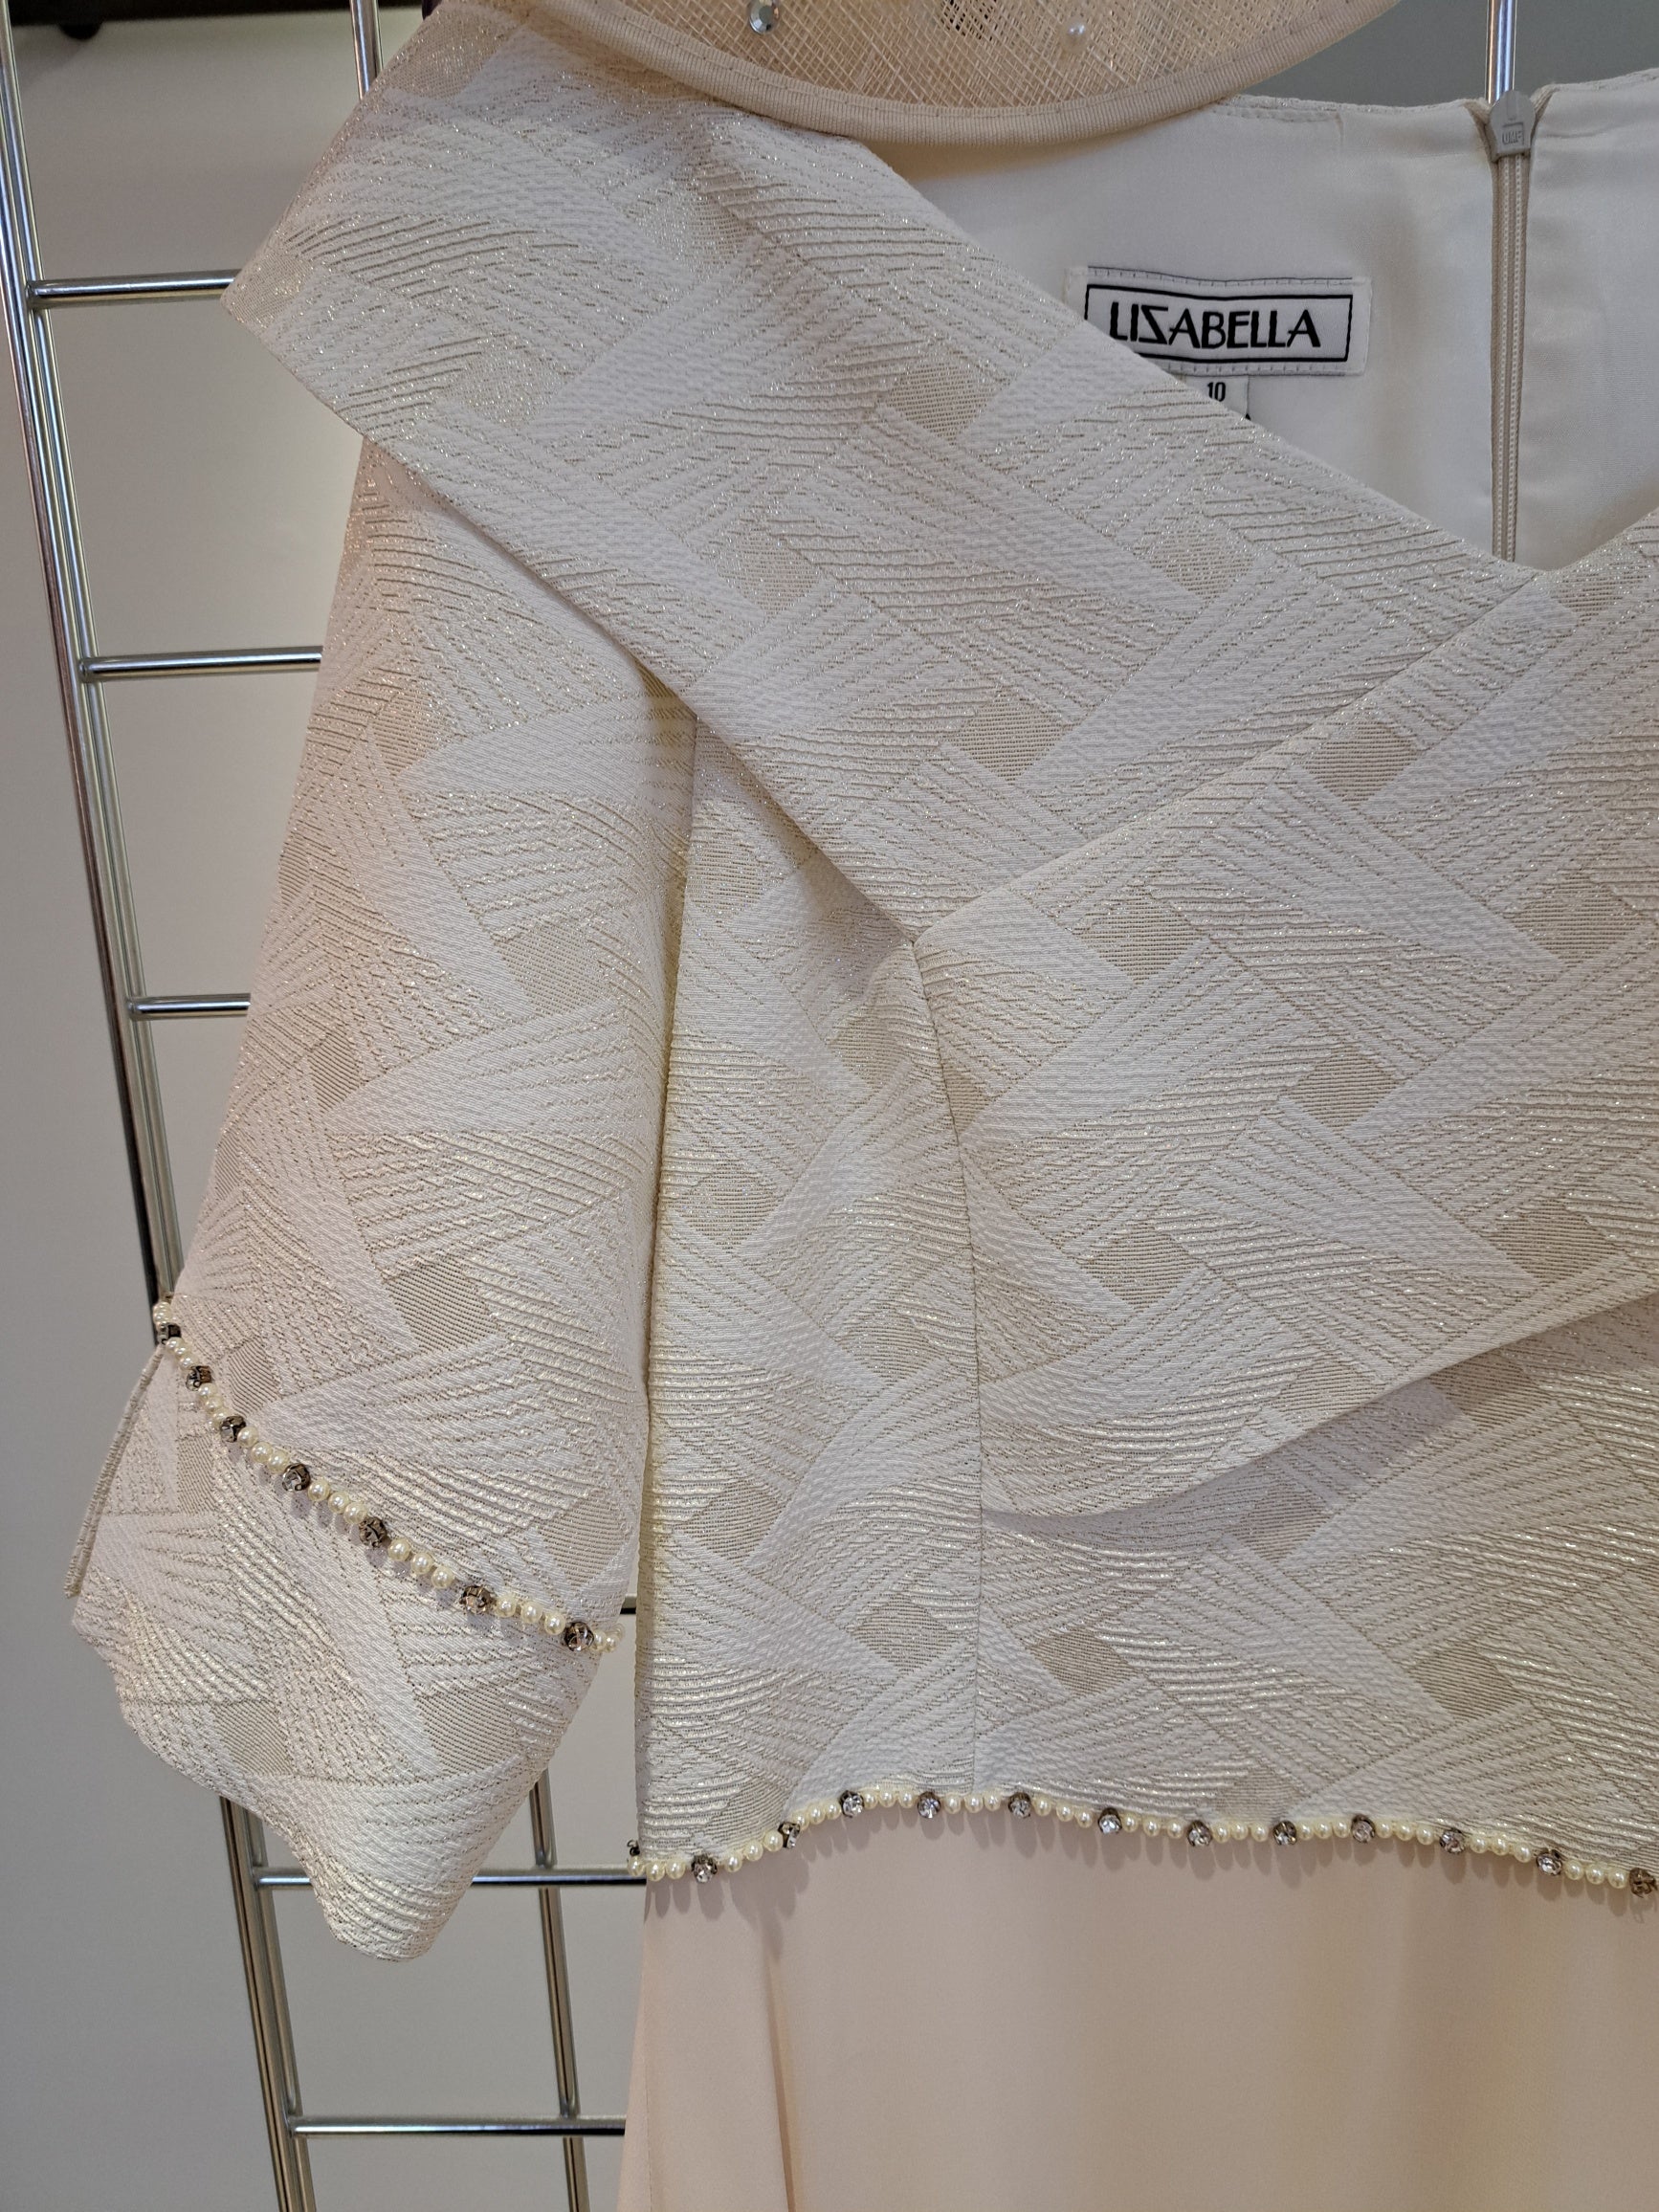 Lizabella Cross over collar dress - Maya Maya Ltd